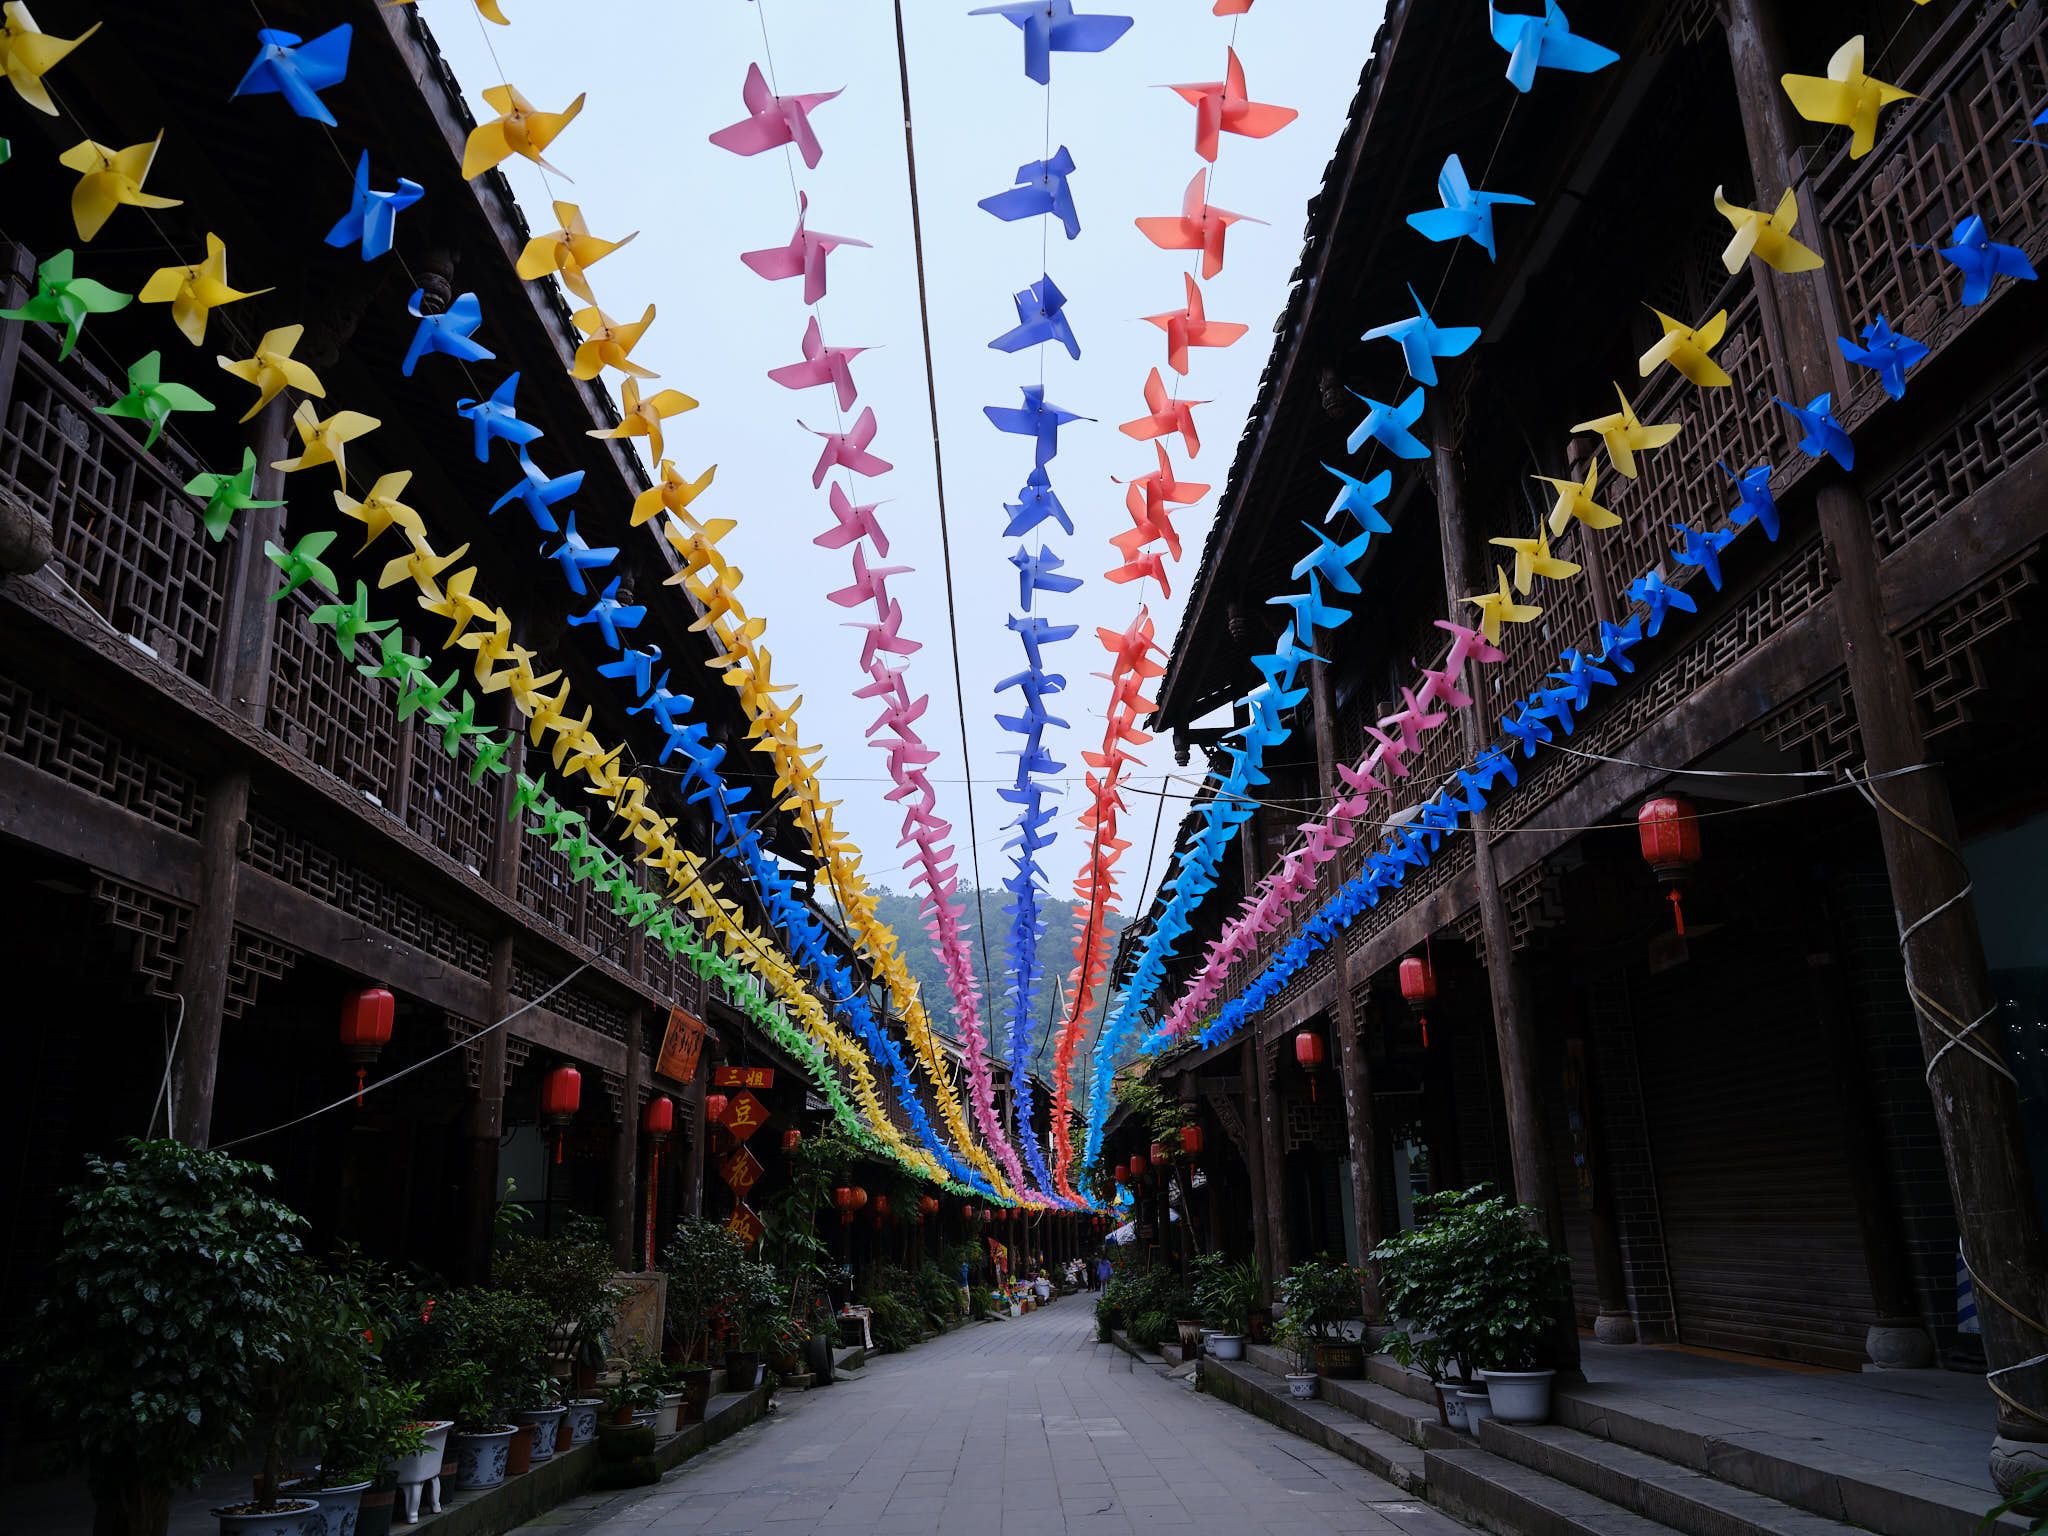 Ribbons overhead in Jiezi Ancient Town